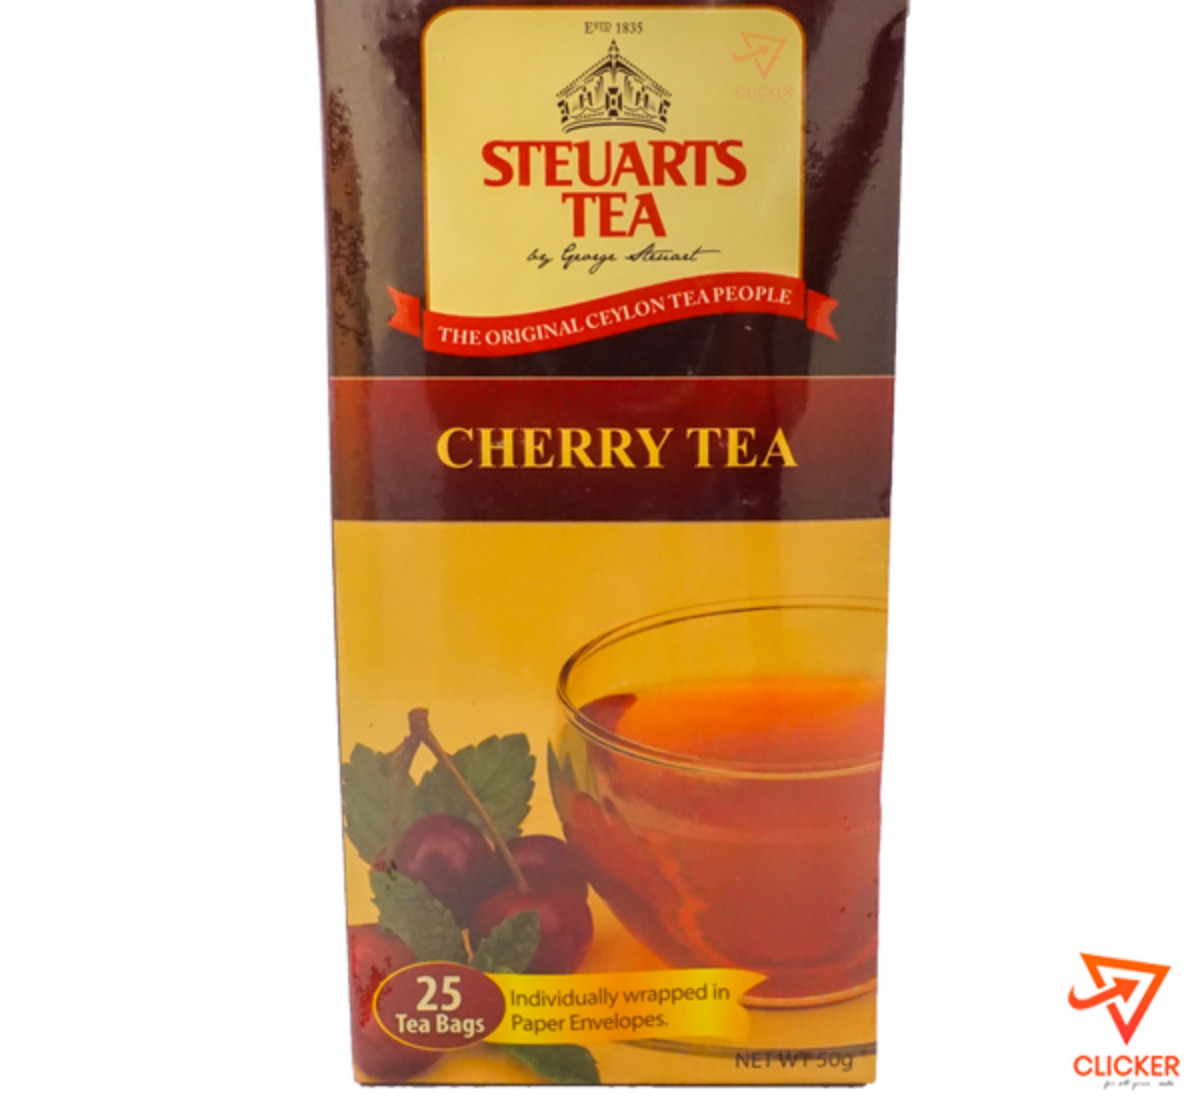 Clicker product 50g GEORGE STEURARTS tea cherry tea (25 tea bags) 929